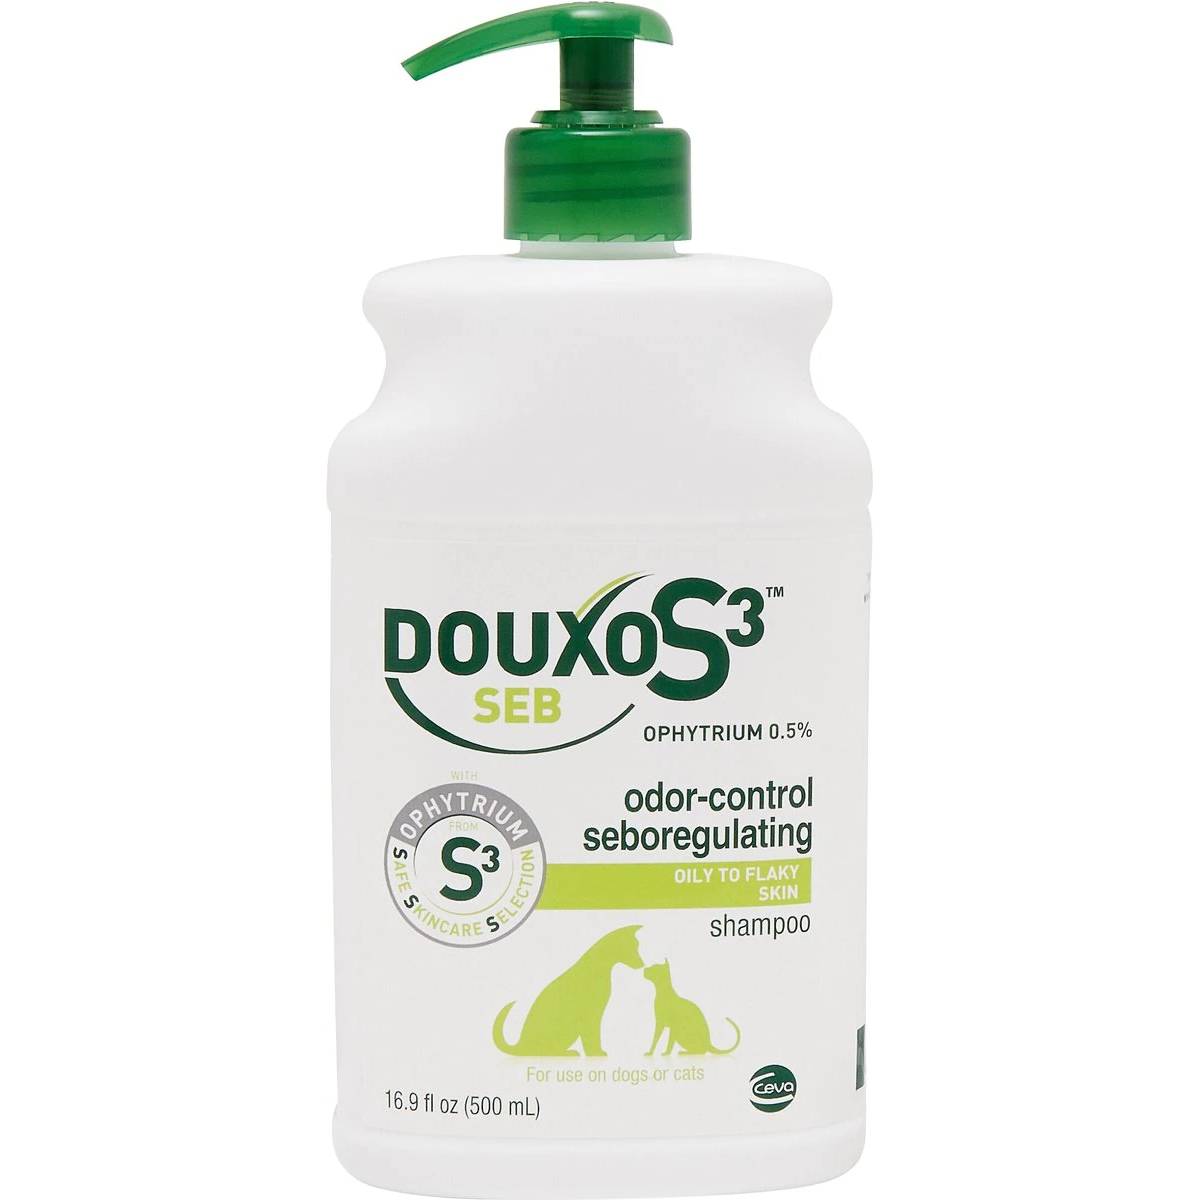 Douxo S3 SEB Odor-Control Seboregulerende Hond & Kat Shampoo